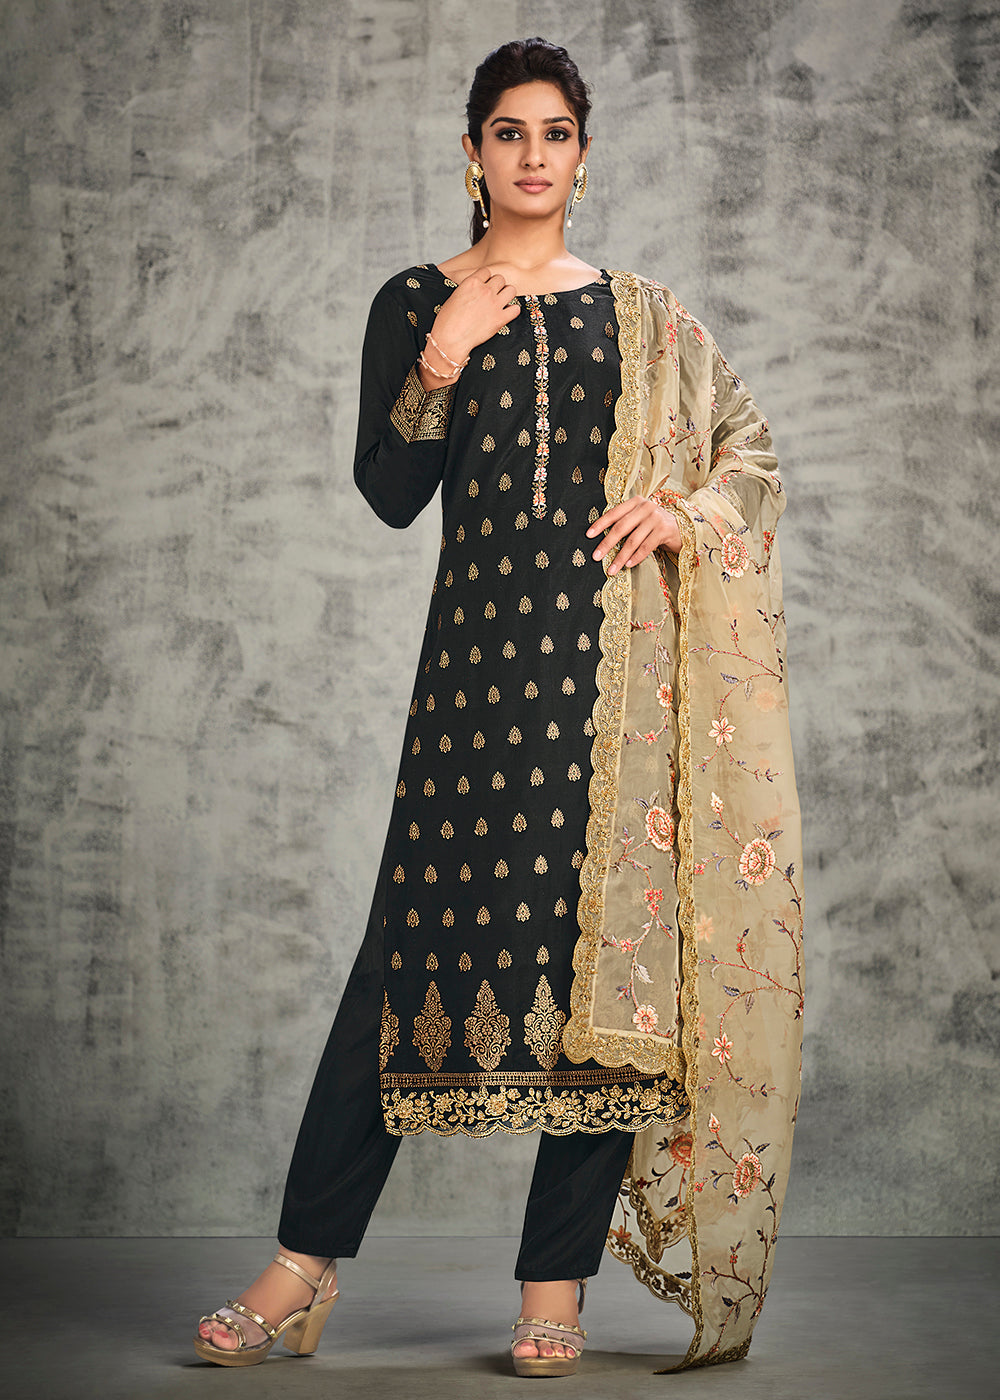 Buy Now Jacquard Silk Adorning Black Pakistani Style Suit Online in USA, UK, Canada & Worldwide at Empress Clothing.